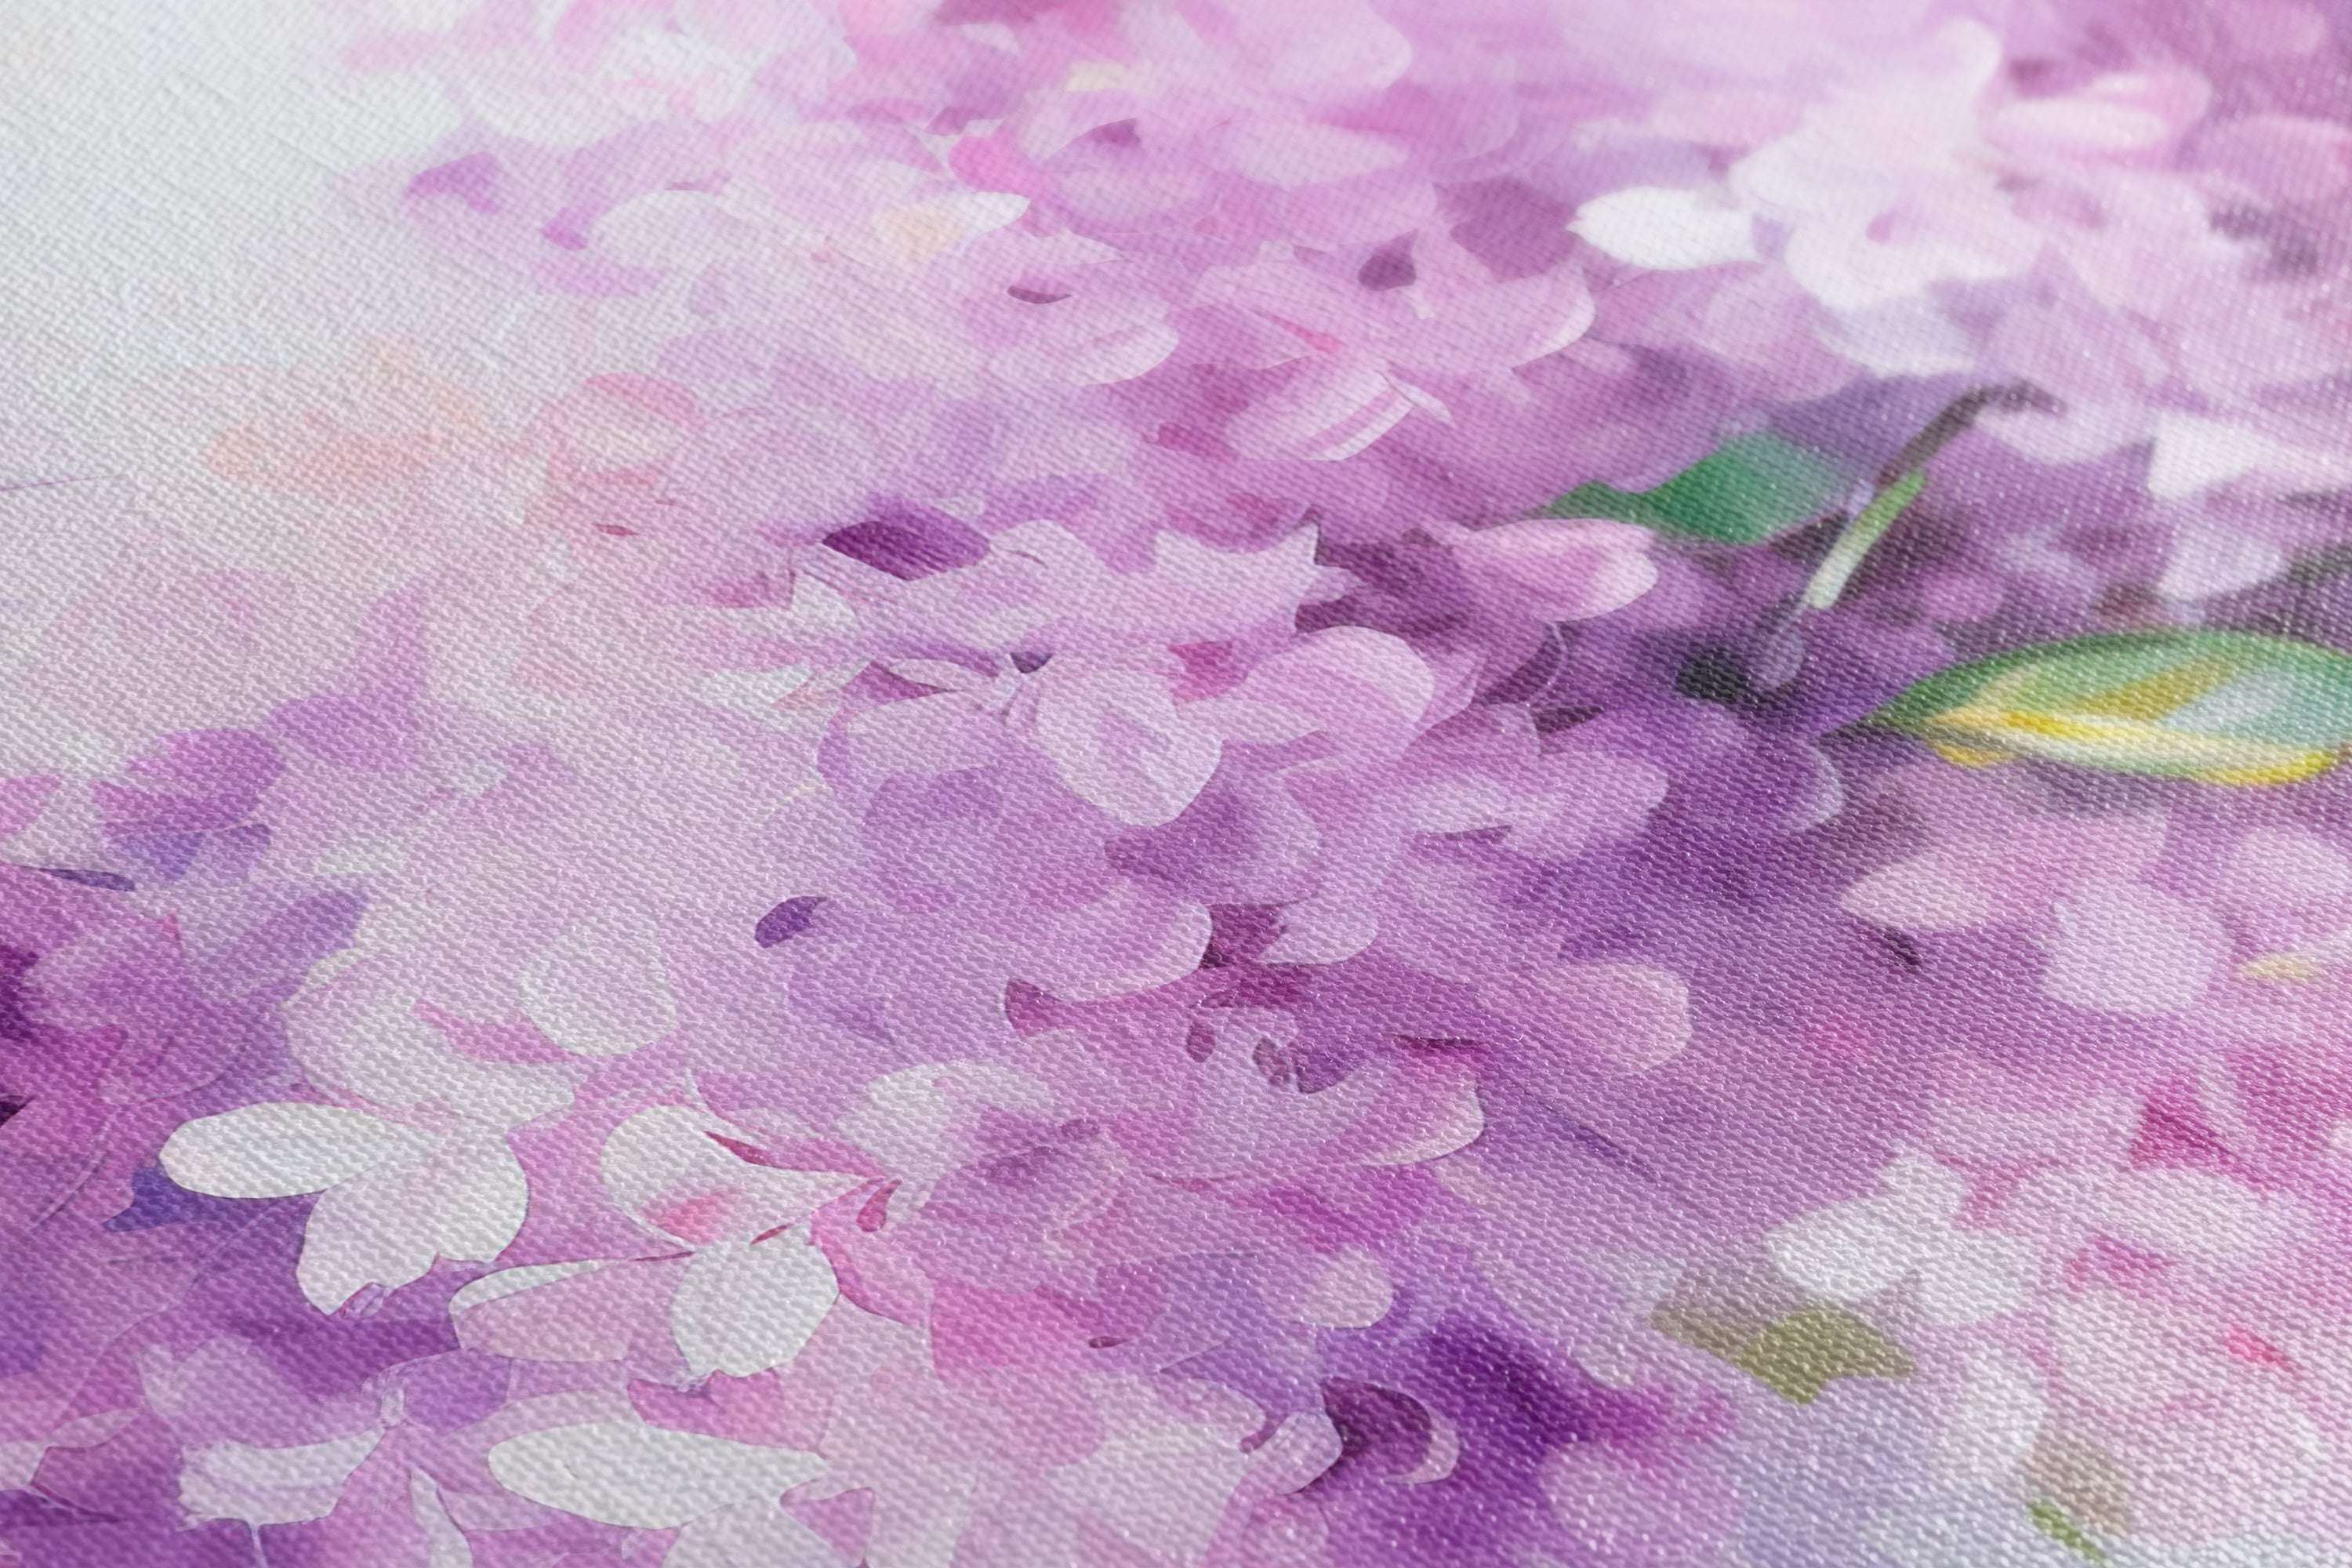 Purple Lilac Branch - Canvas Print - Artoholica Ready to Hang Canvas Print